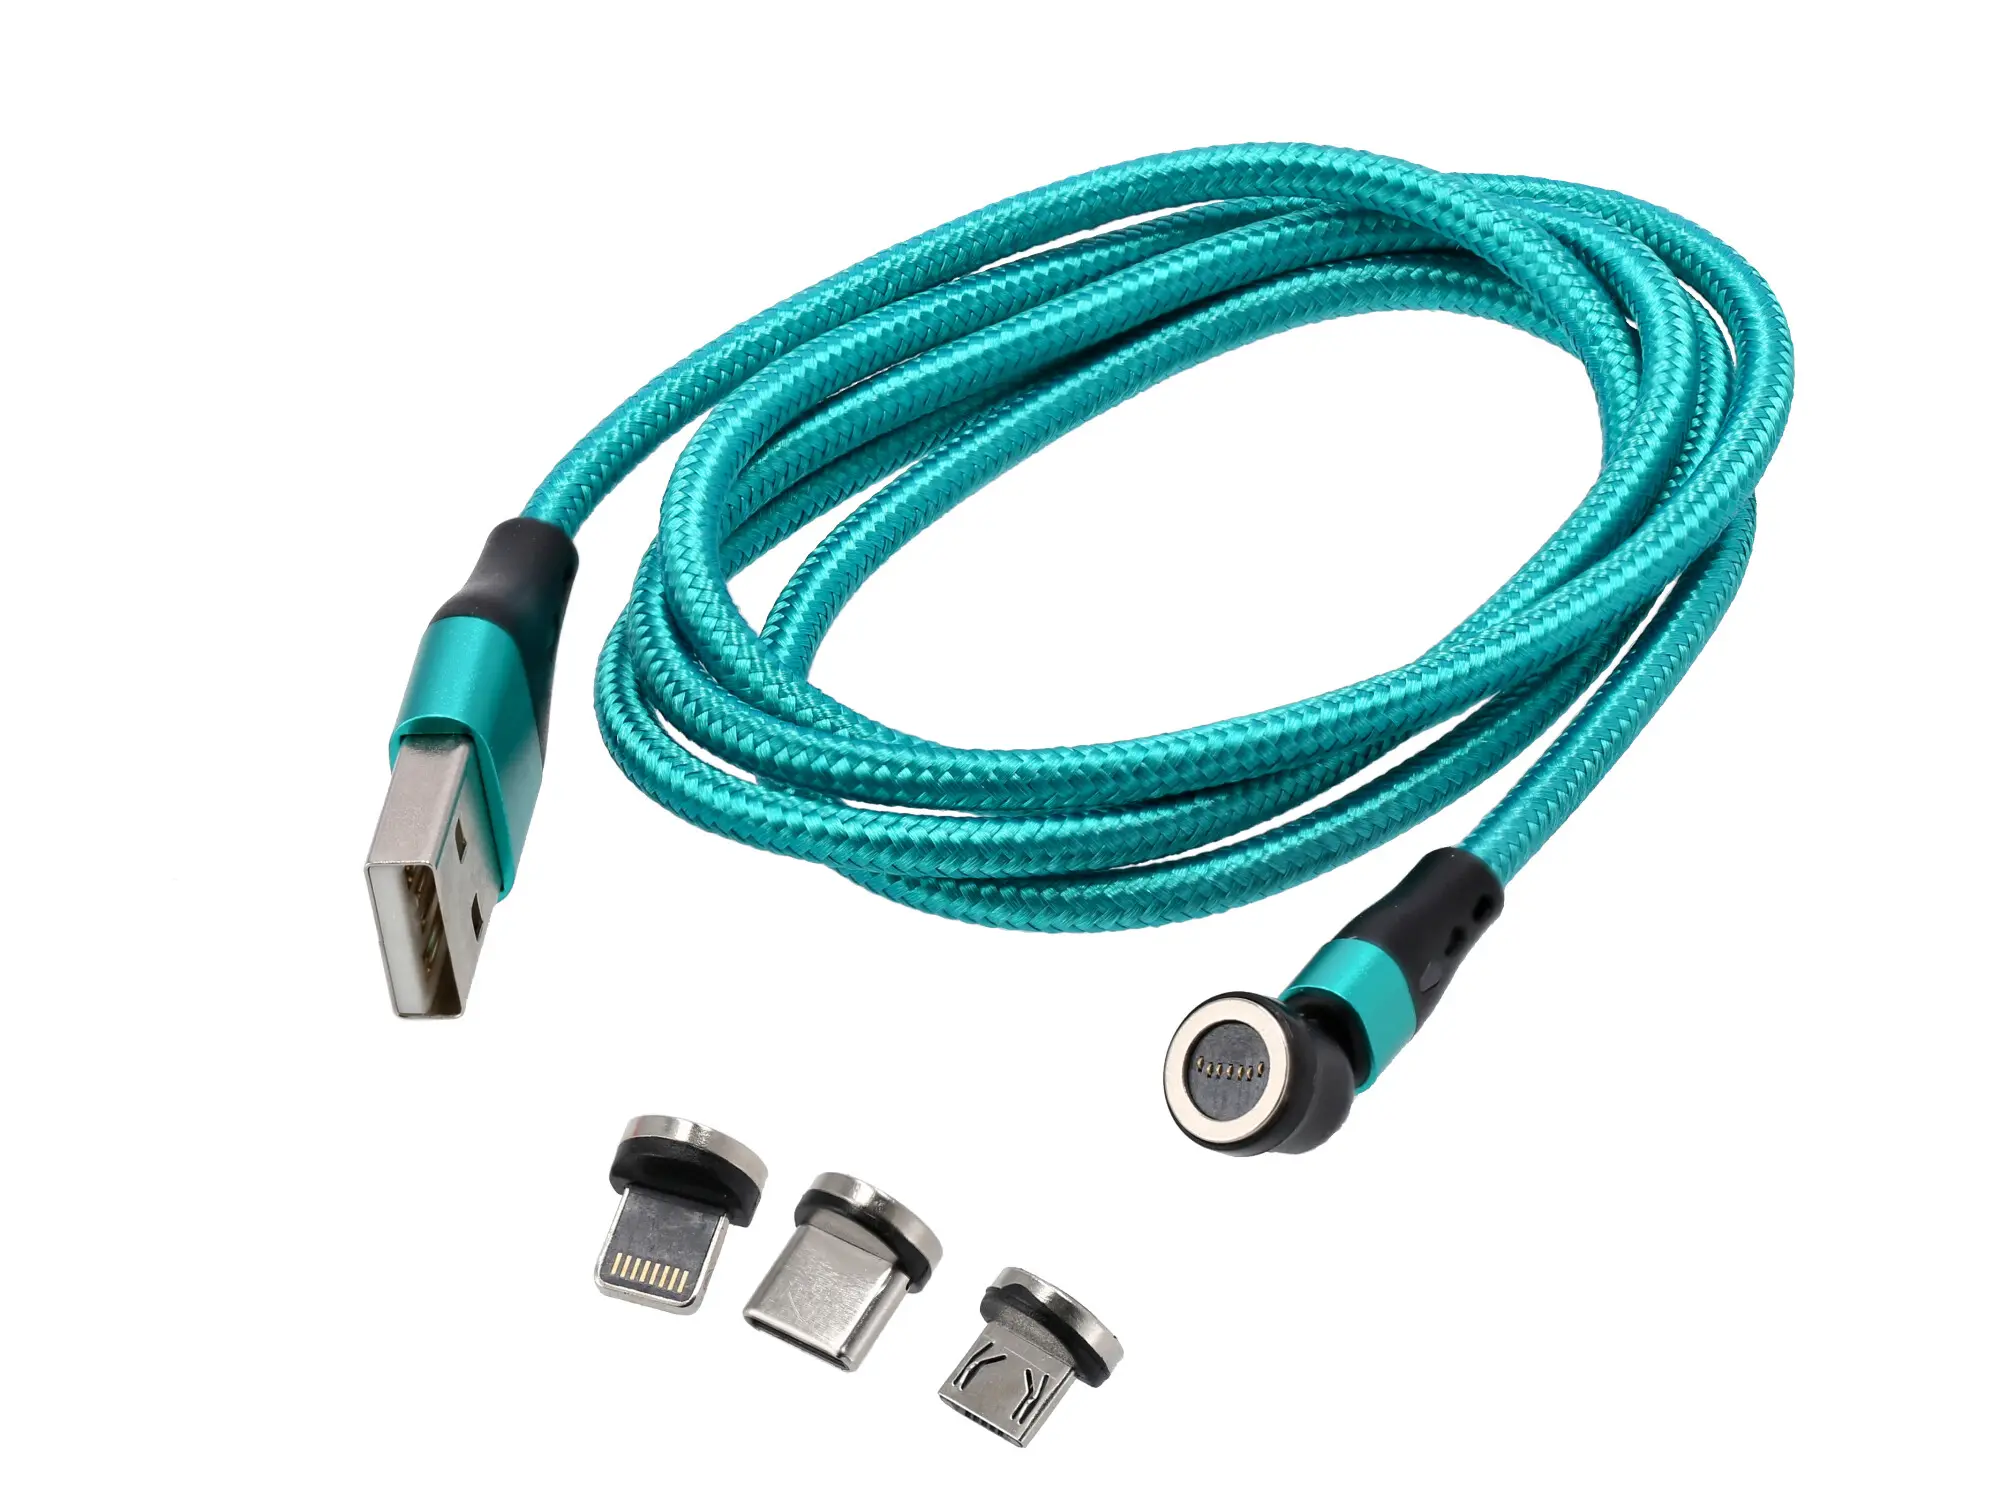 Magnetisches USB-Ladekabel 3 in 1 Farbe grün, Item no: 10076808 - Image 1